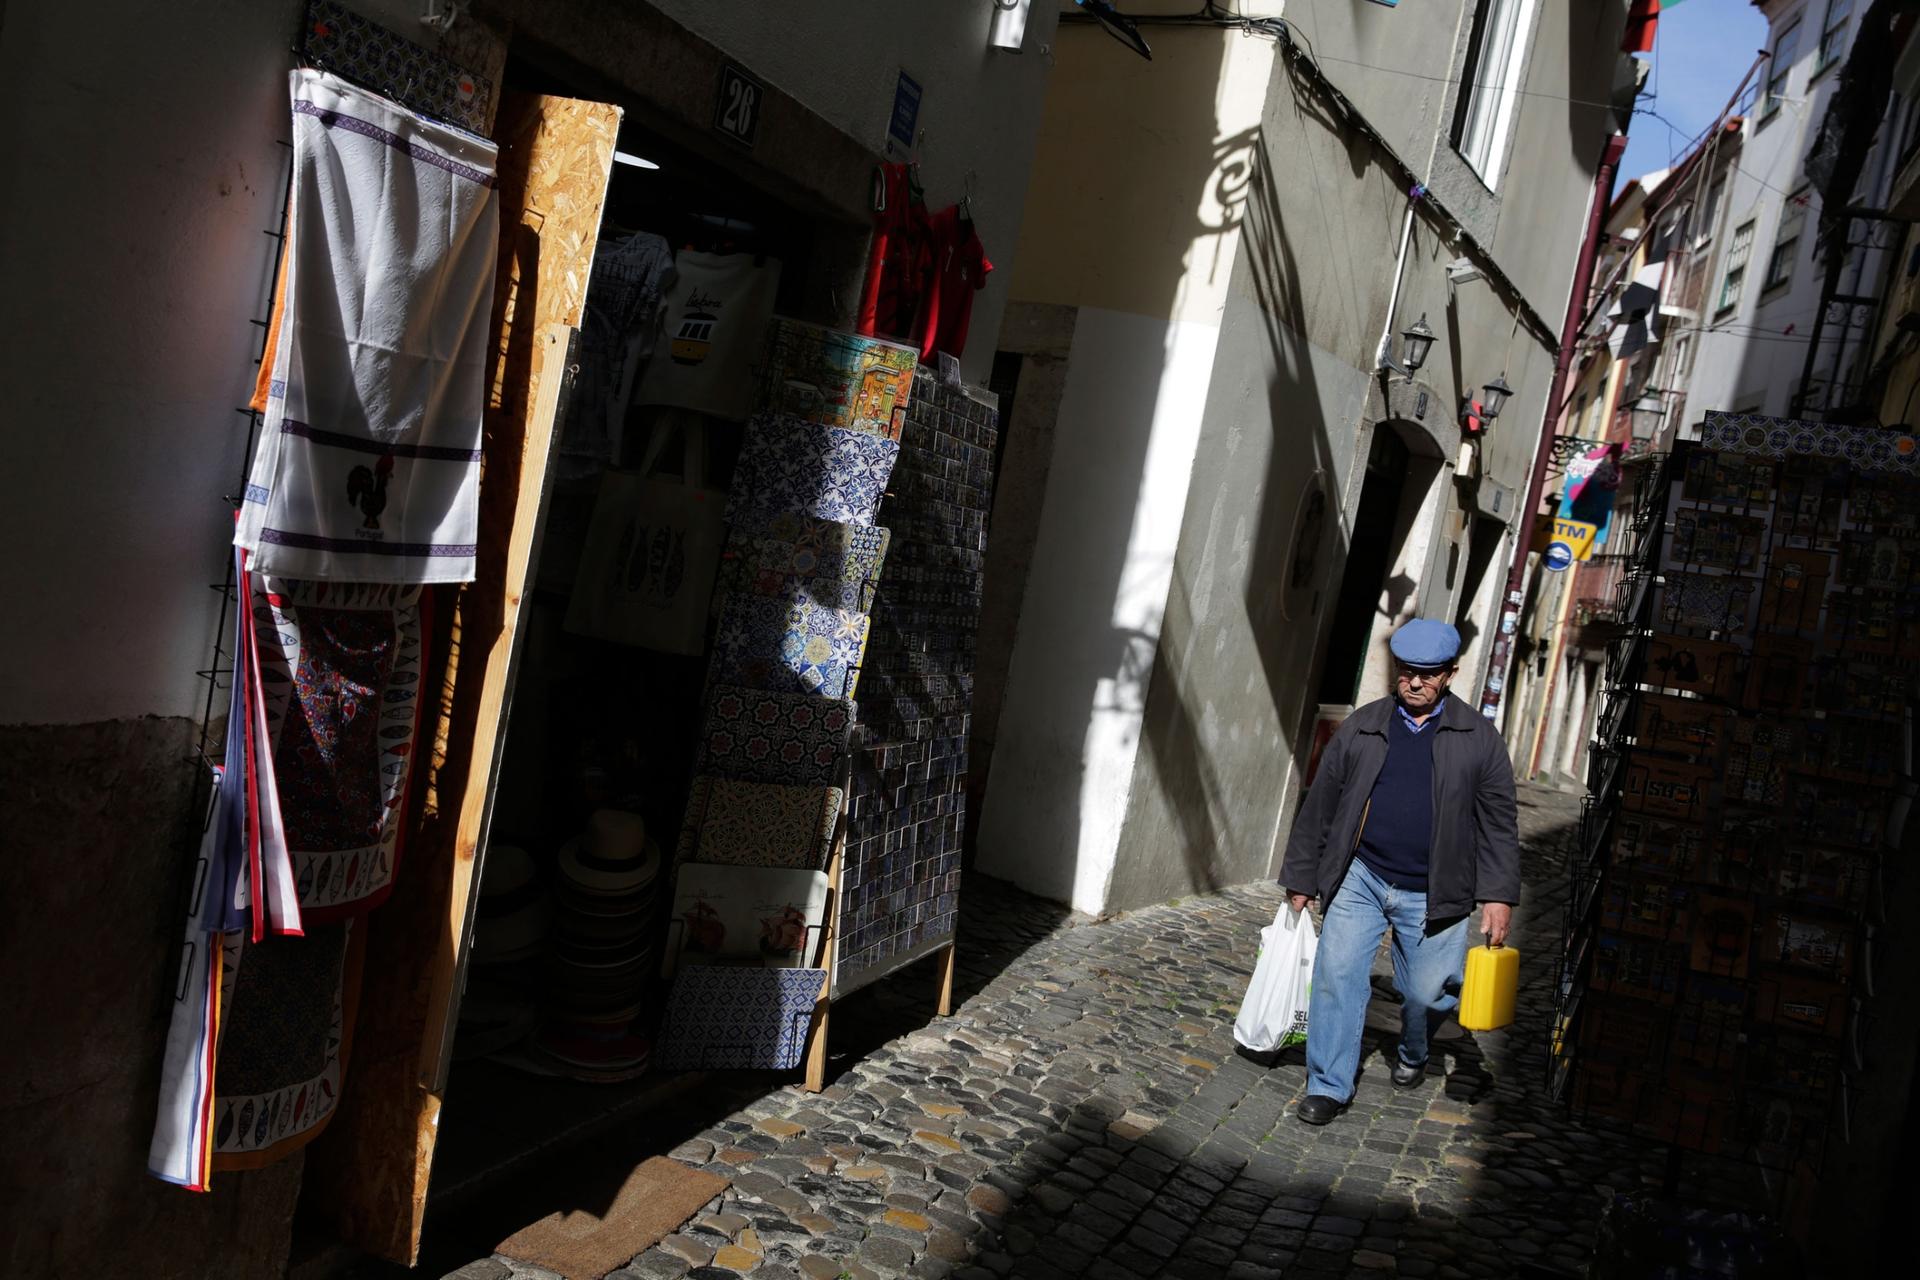 A man walks in Lisbon's old Alfama riverside neighborhood Friday, March 13, 2020.